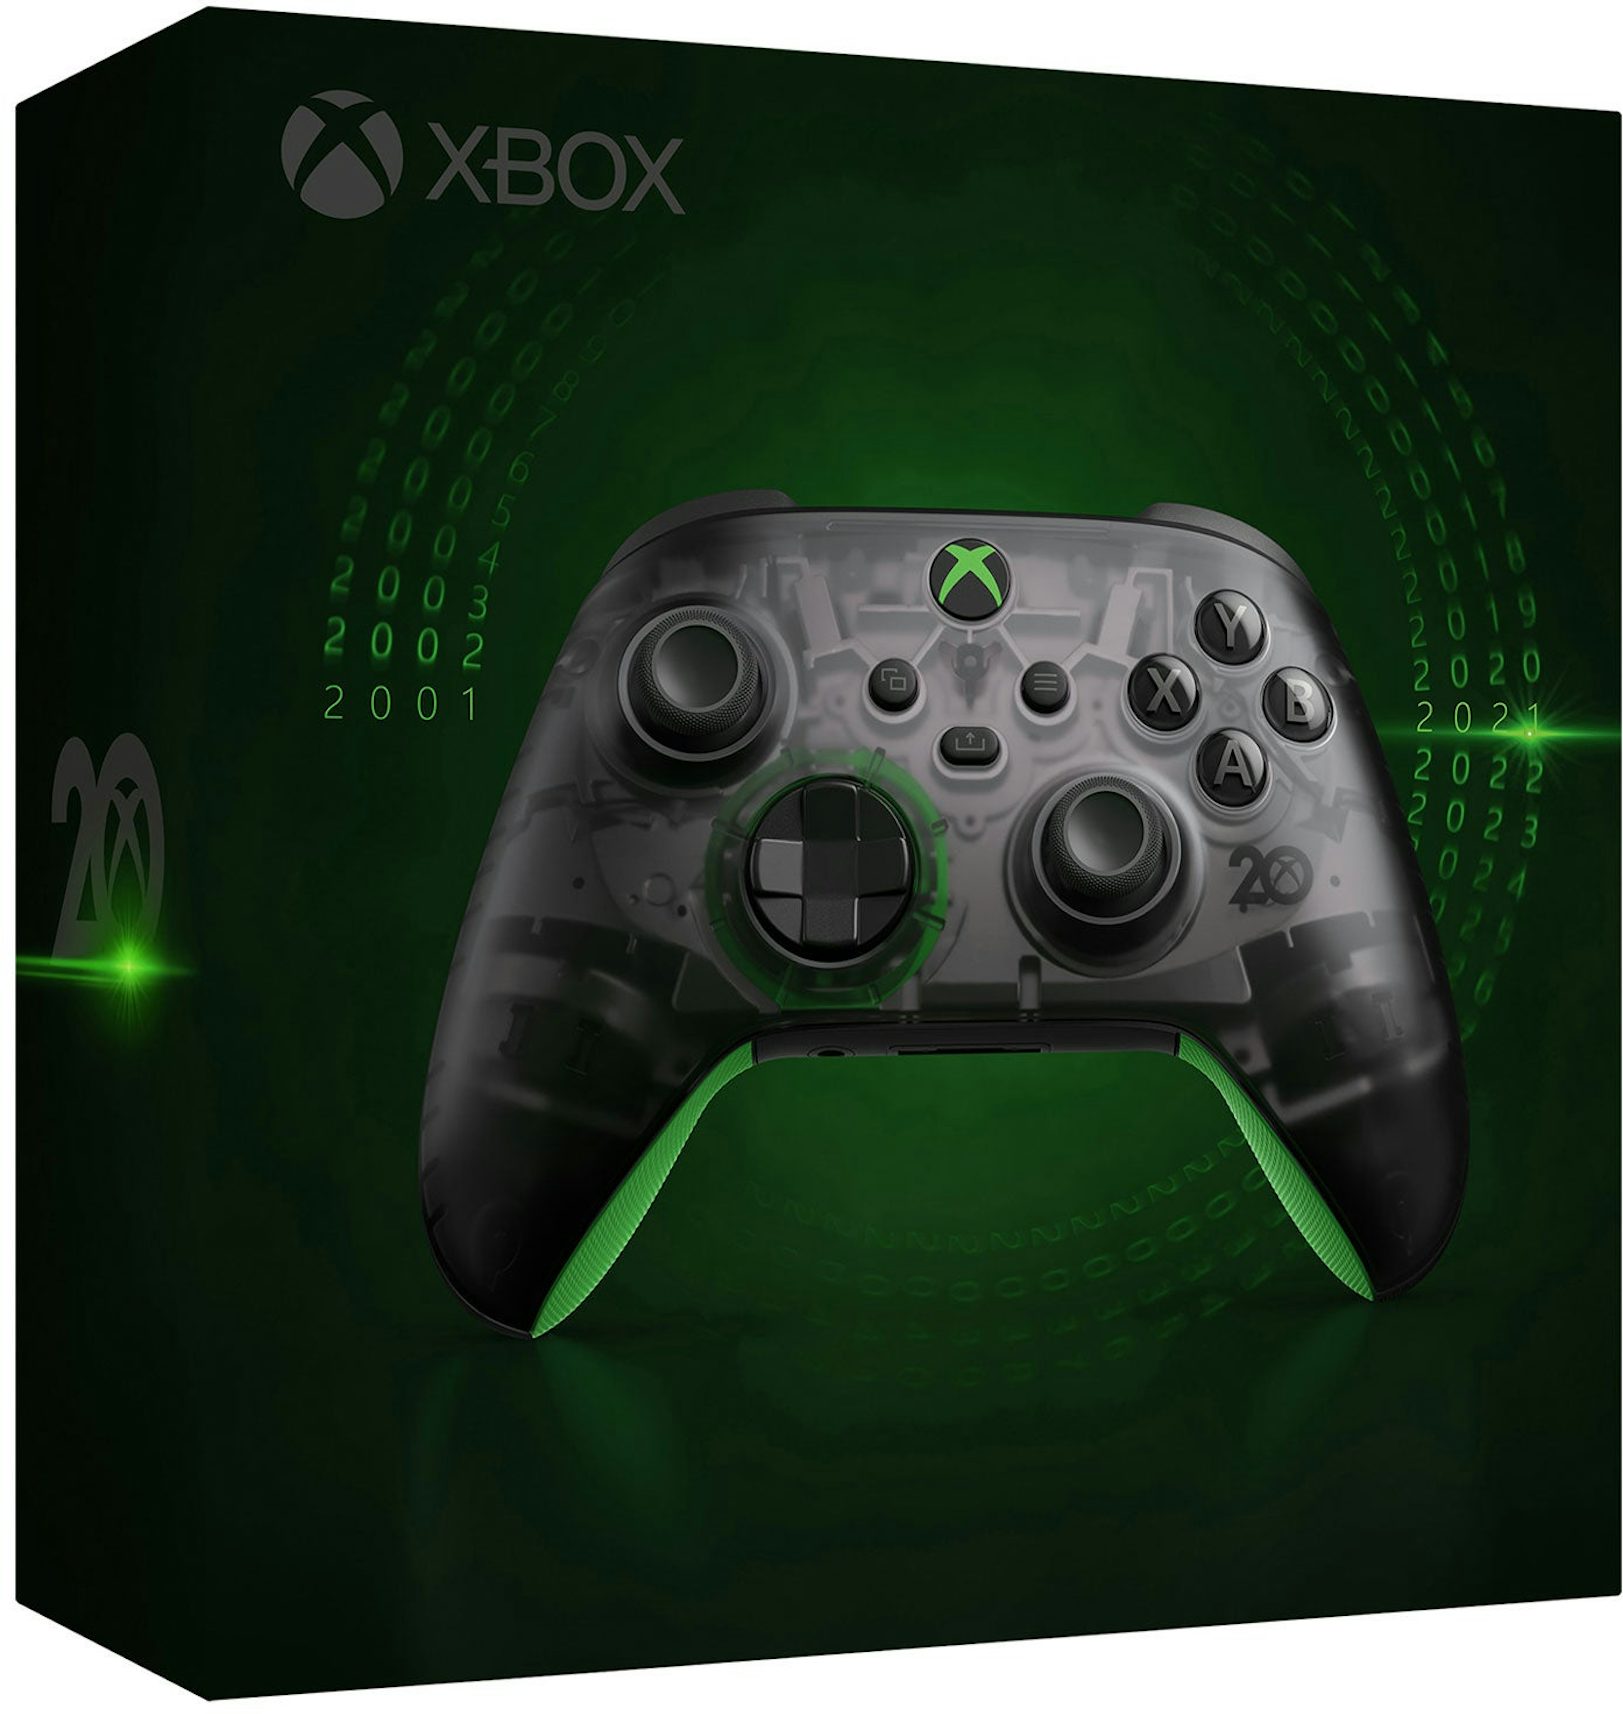 Microsoft Xbox 360 Special Edition Chrome Series Wireless